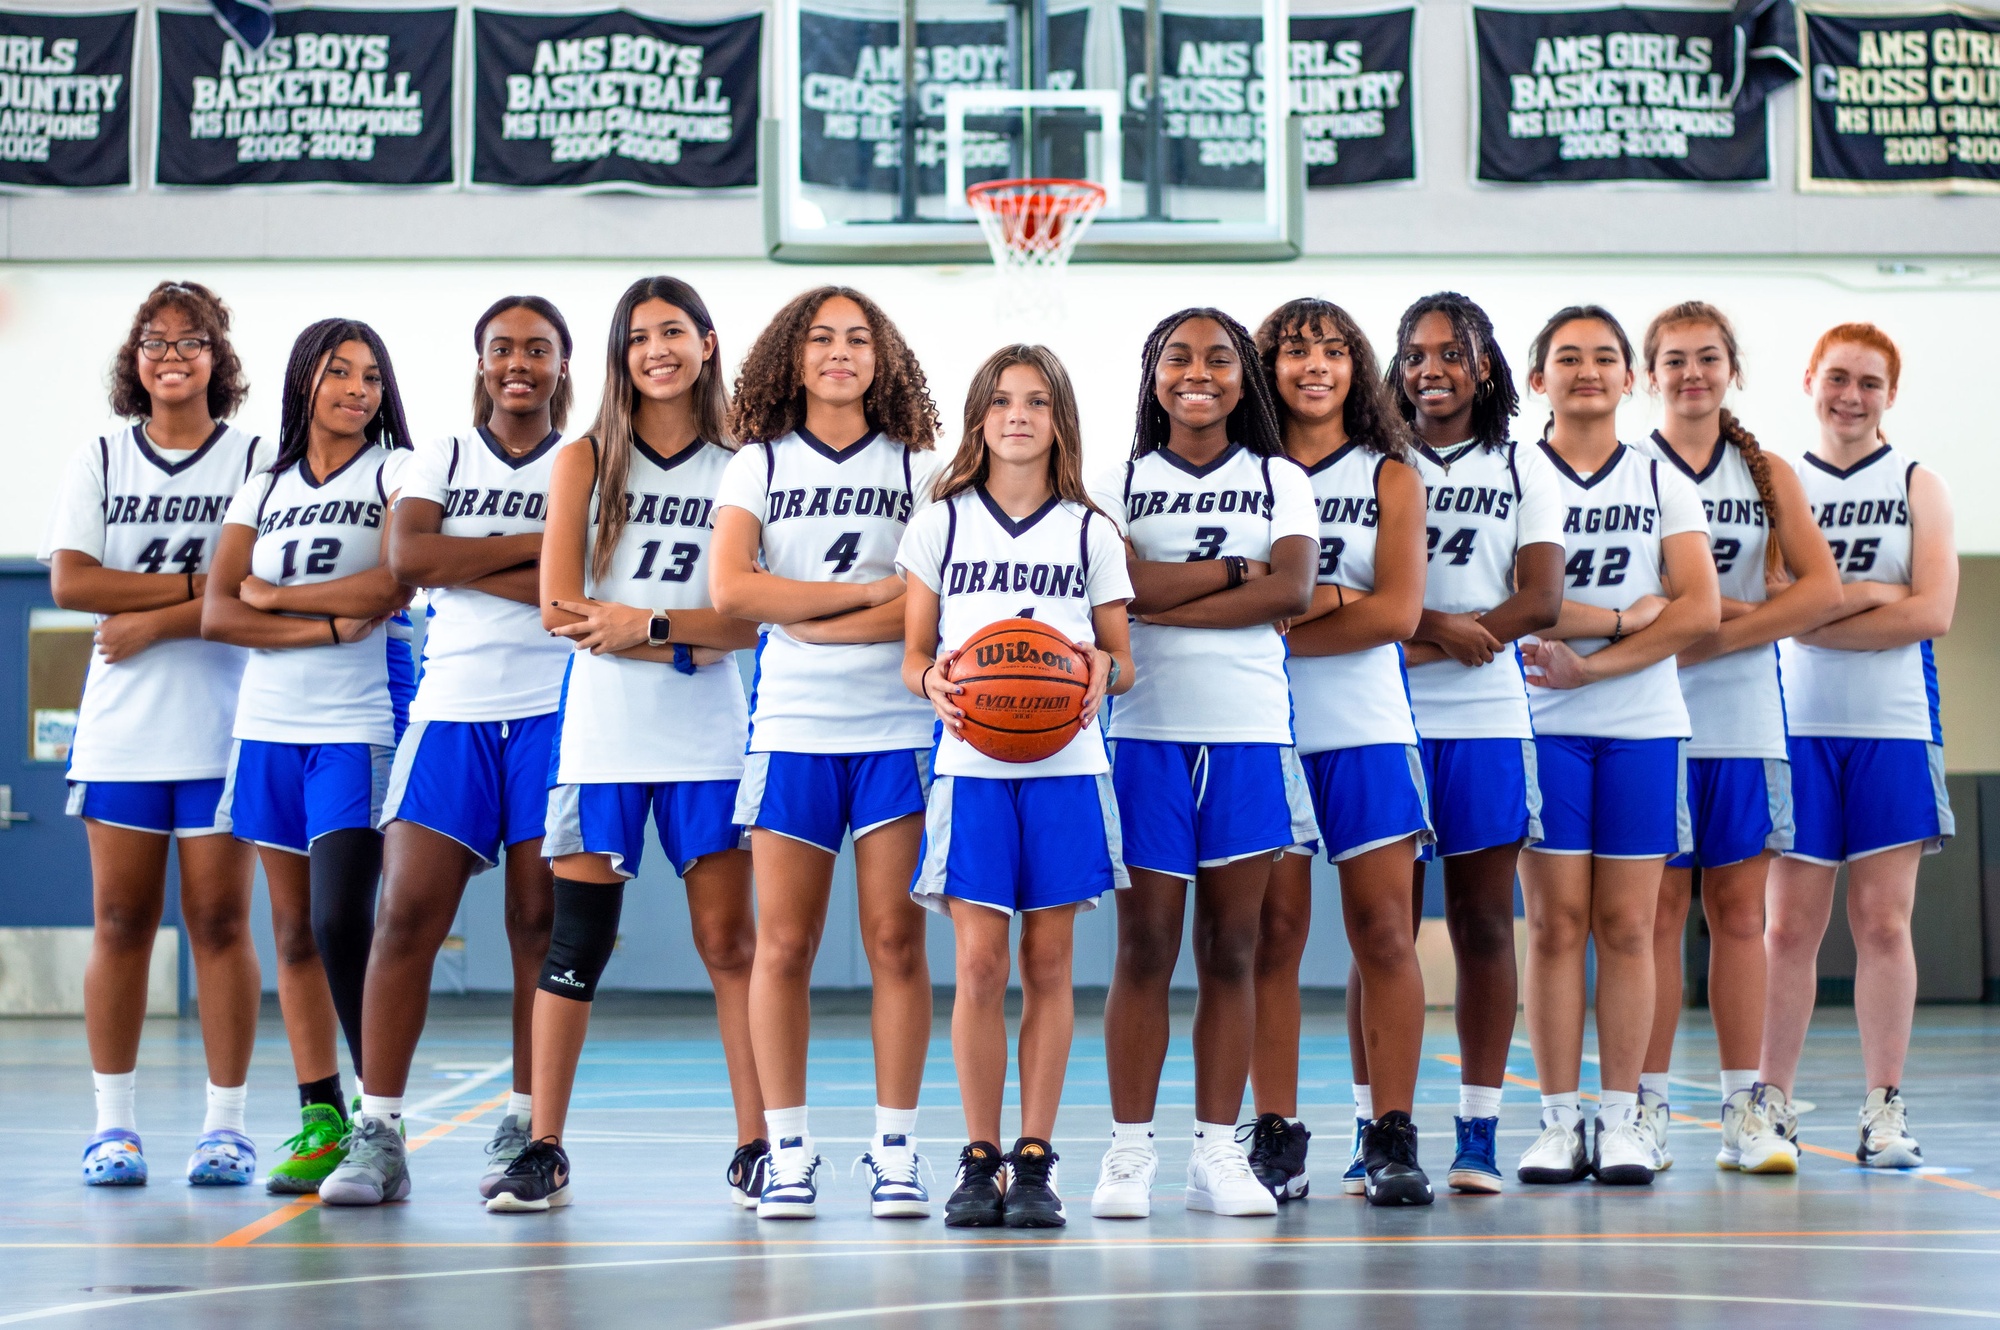 DVIDS - Images - Andersen Middle School girls' basketball team go